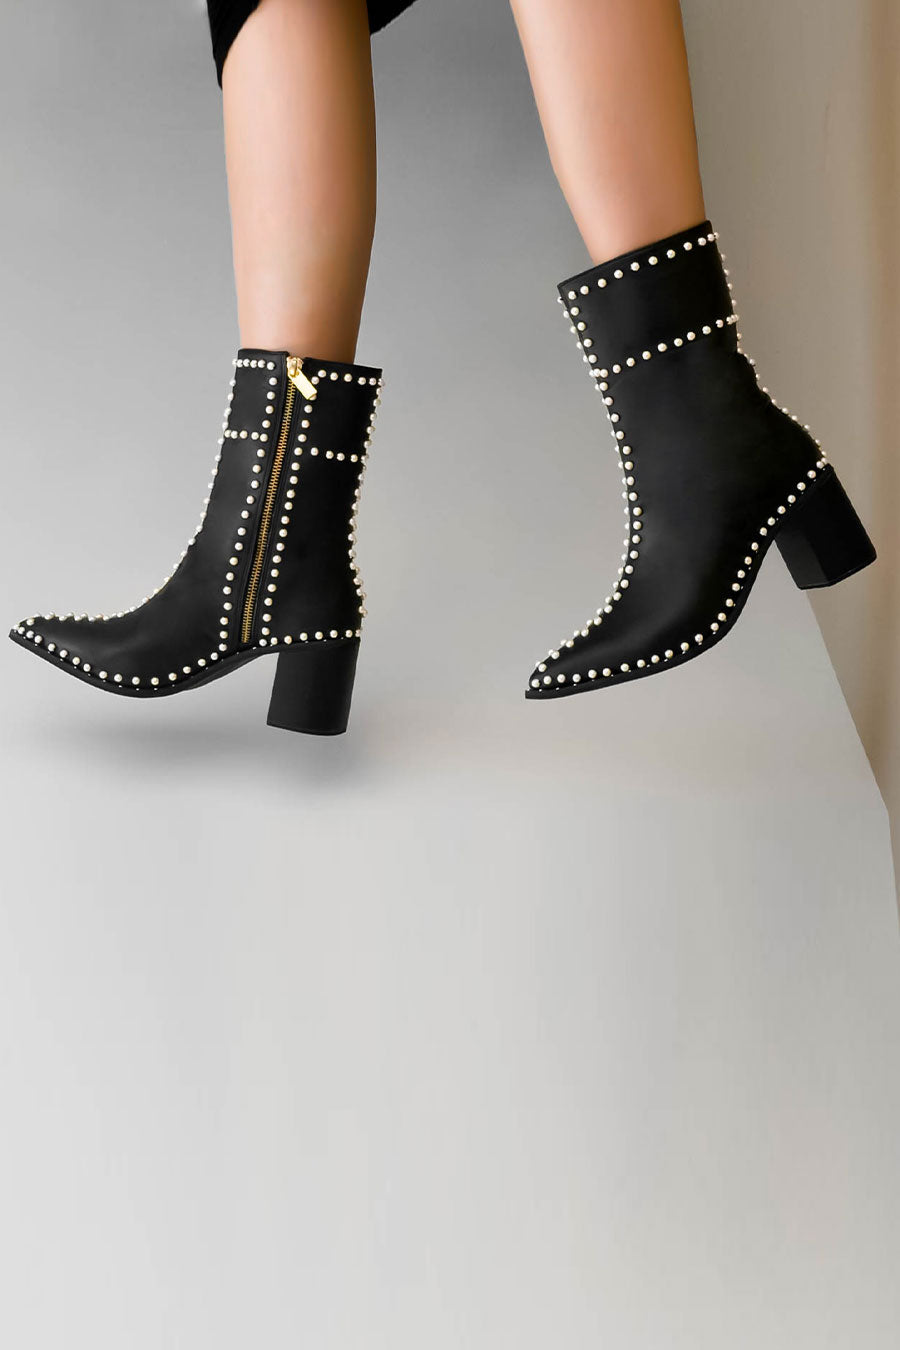 Black Pearl Embellished Boots